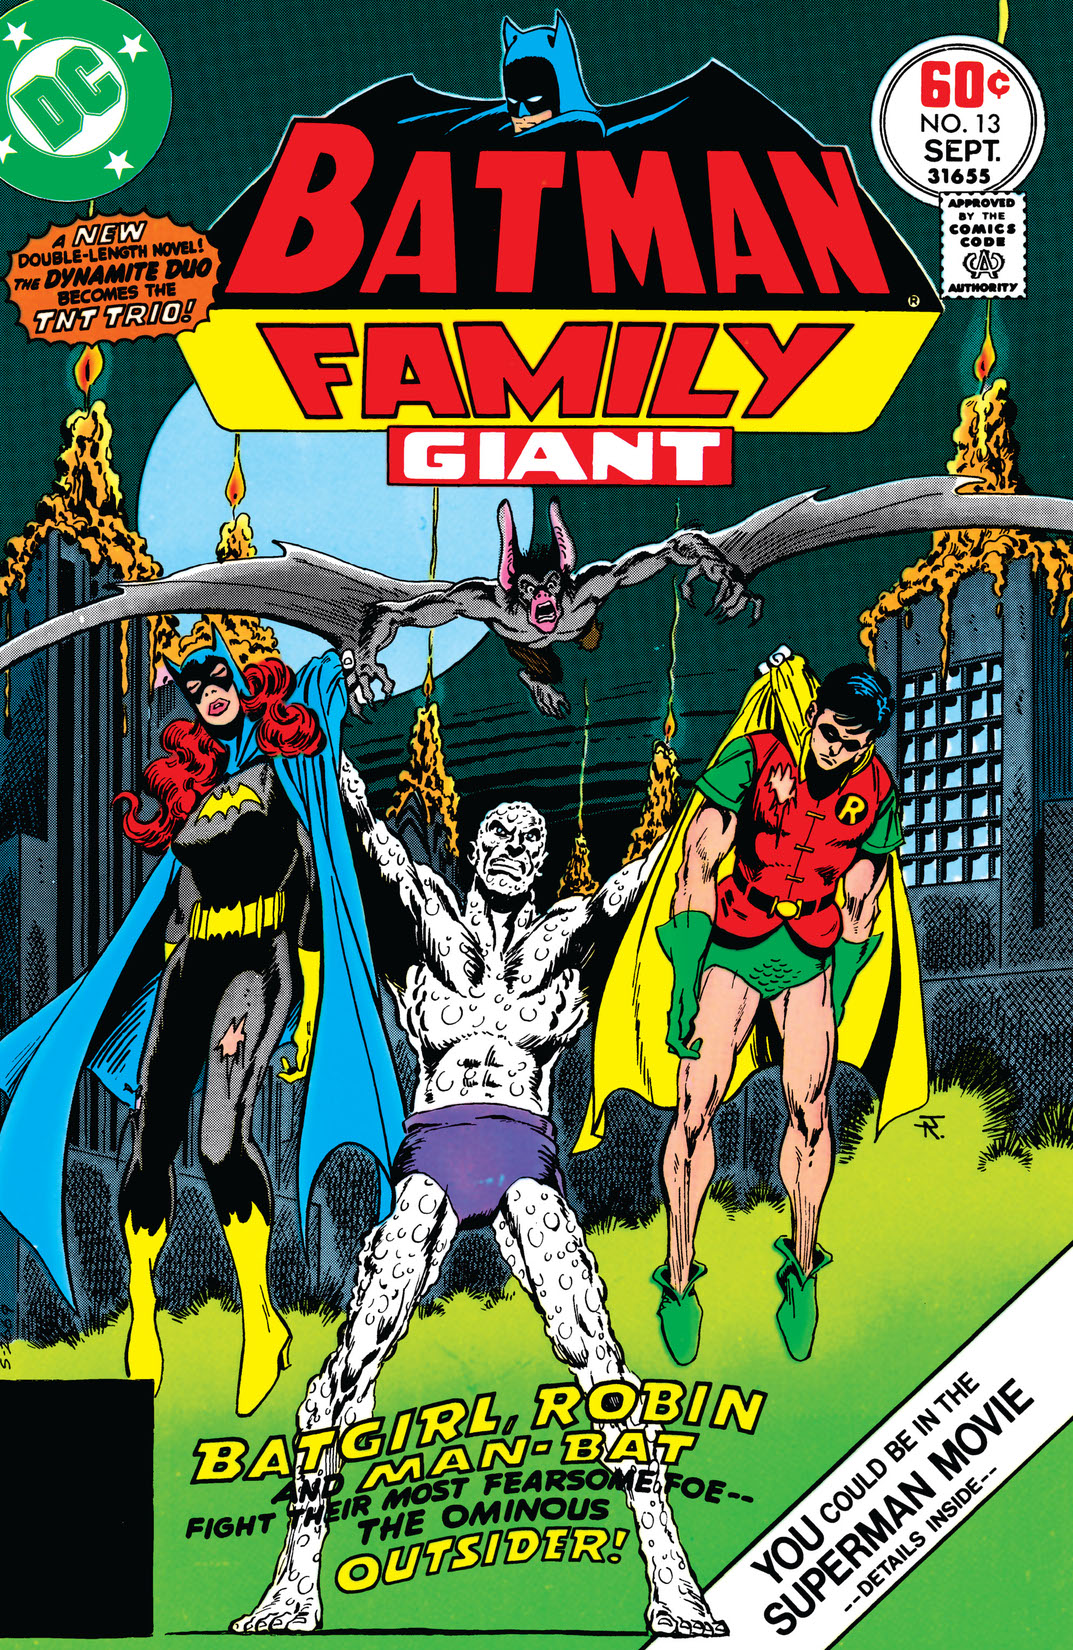 Batman Family #13 preview images